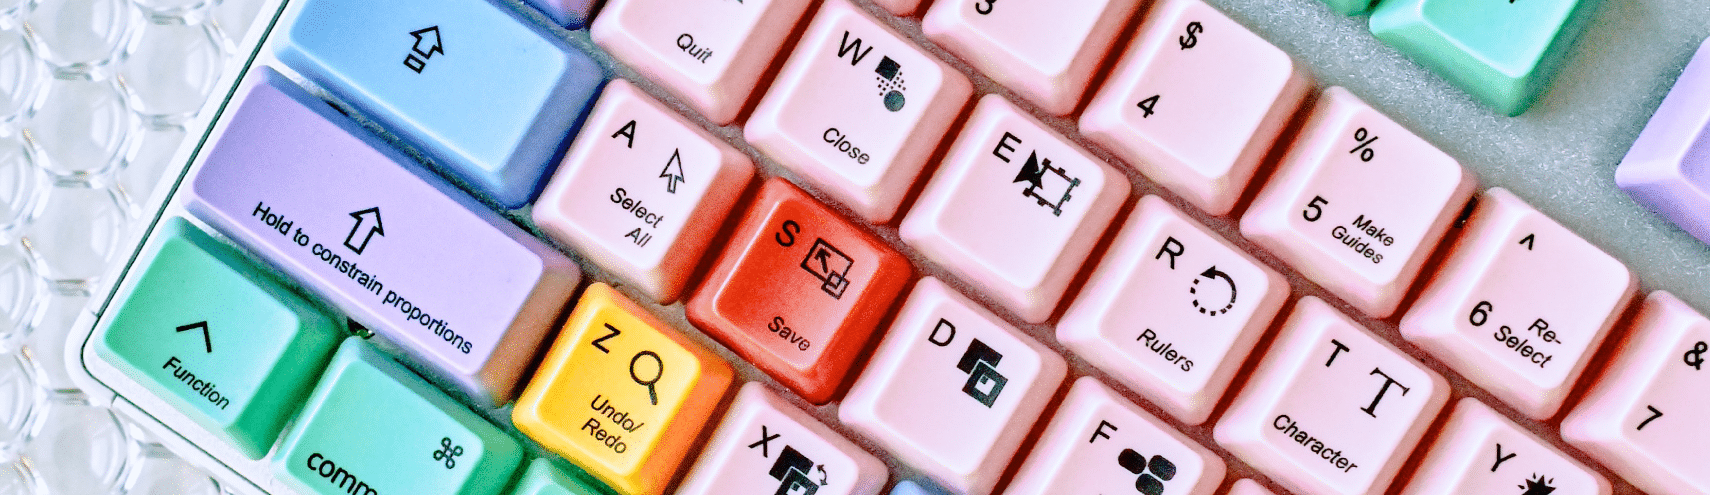 Rainbow colored desktop keyboard